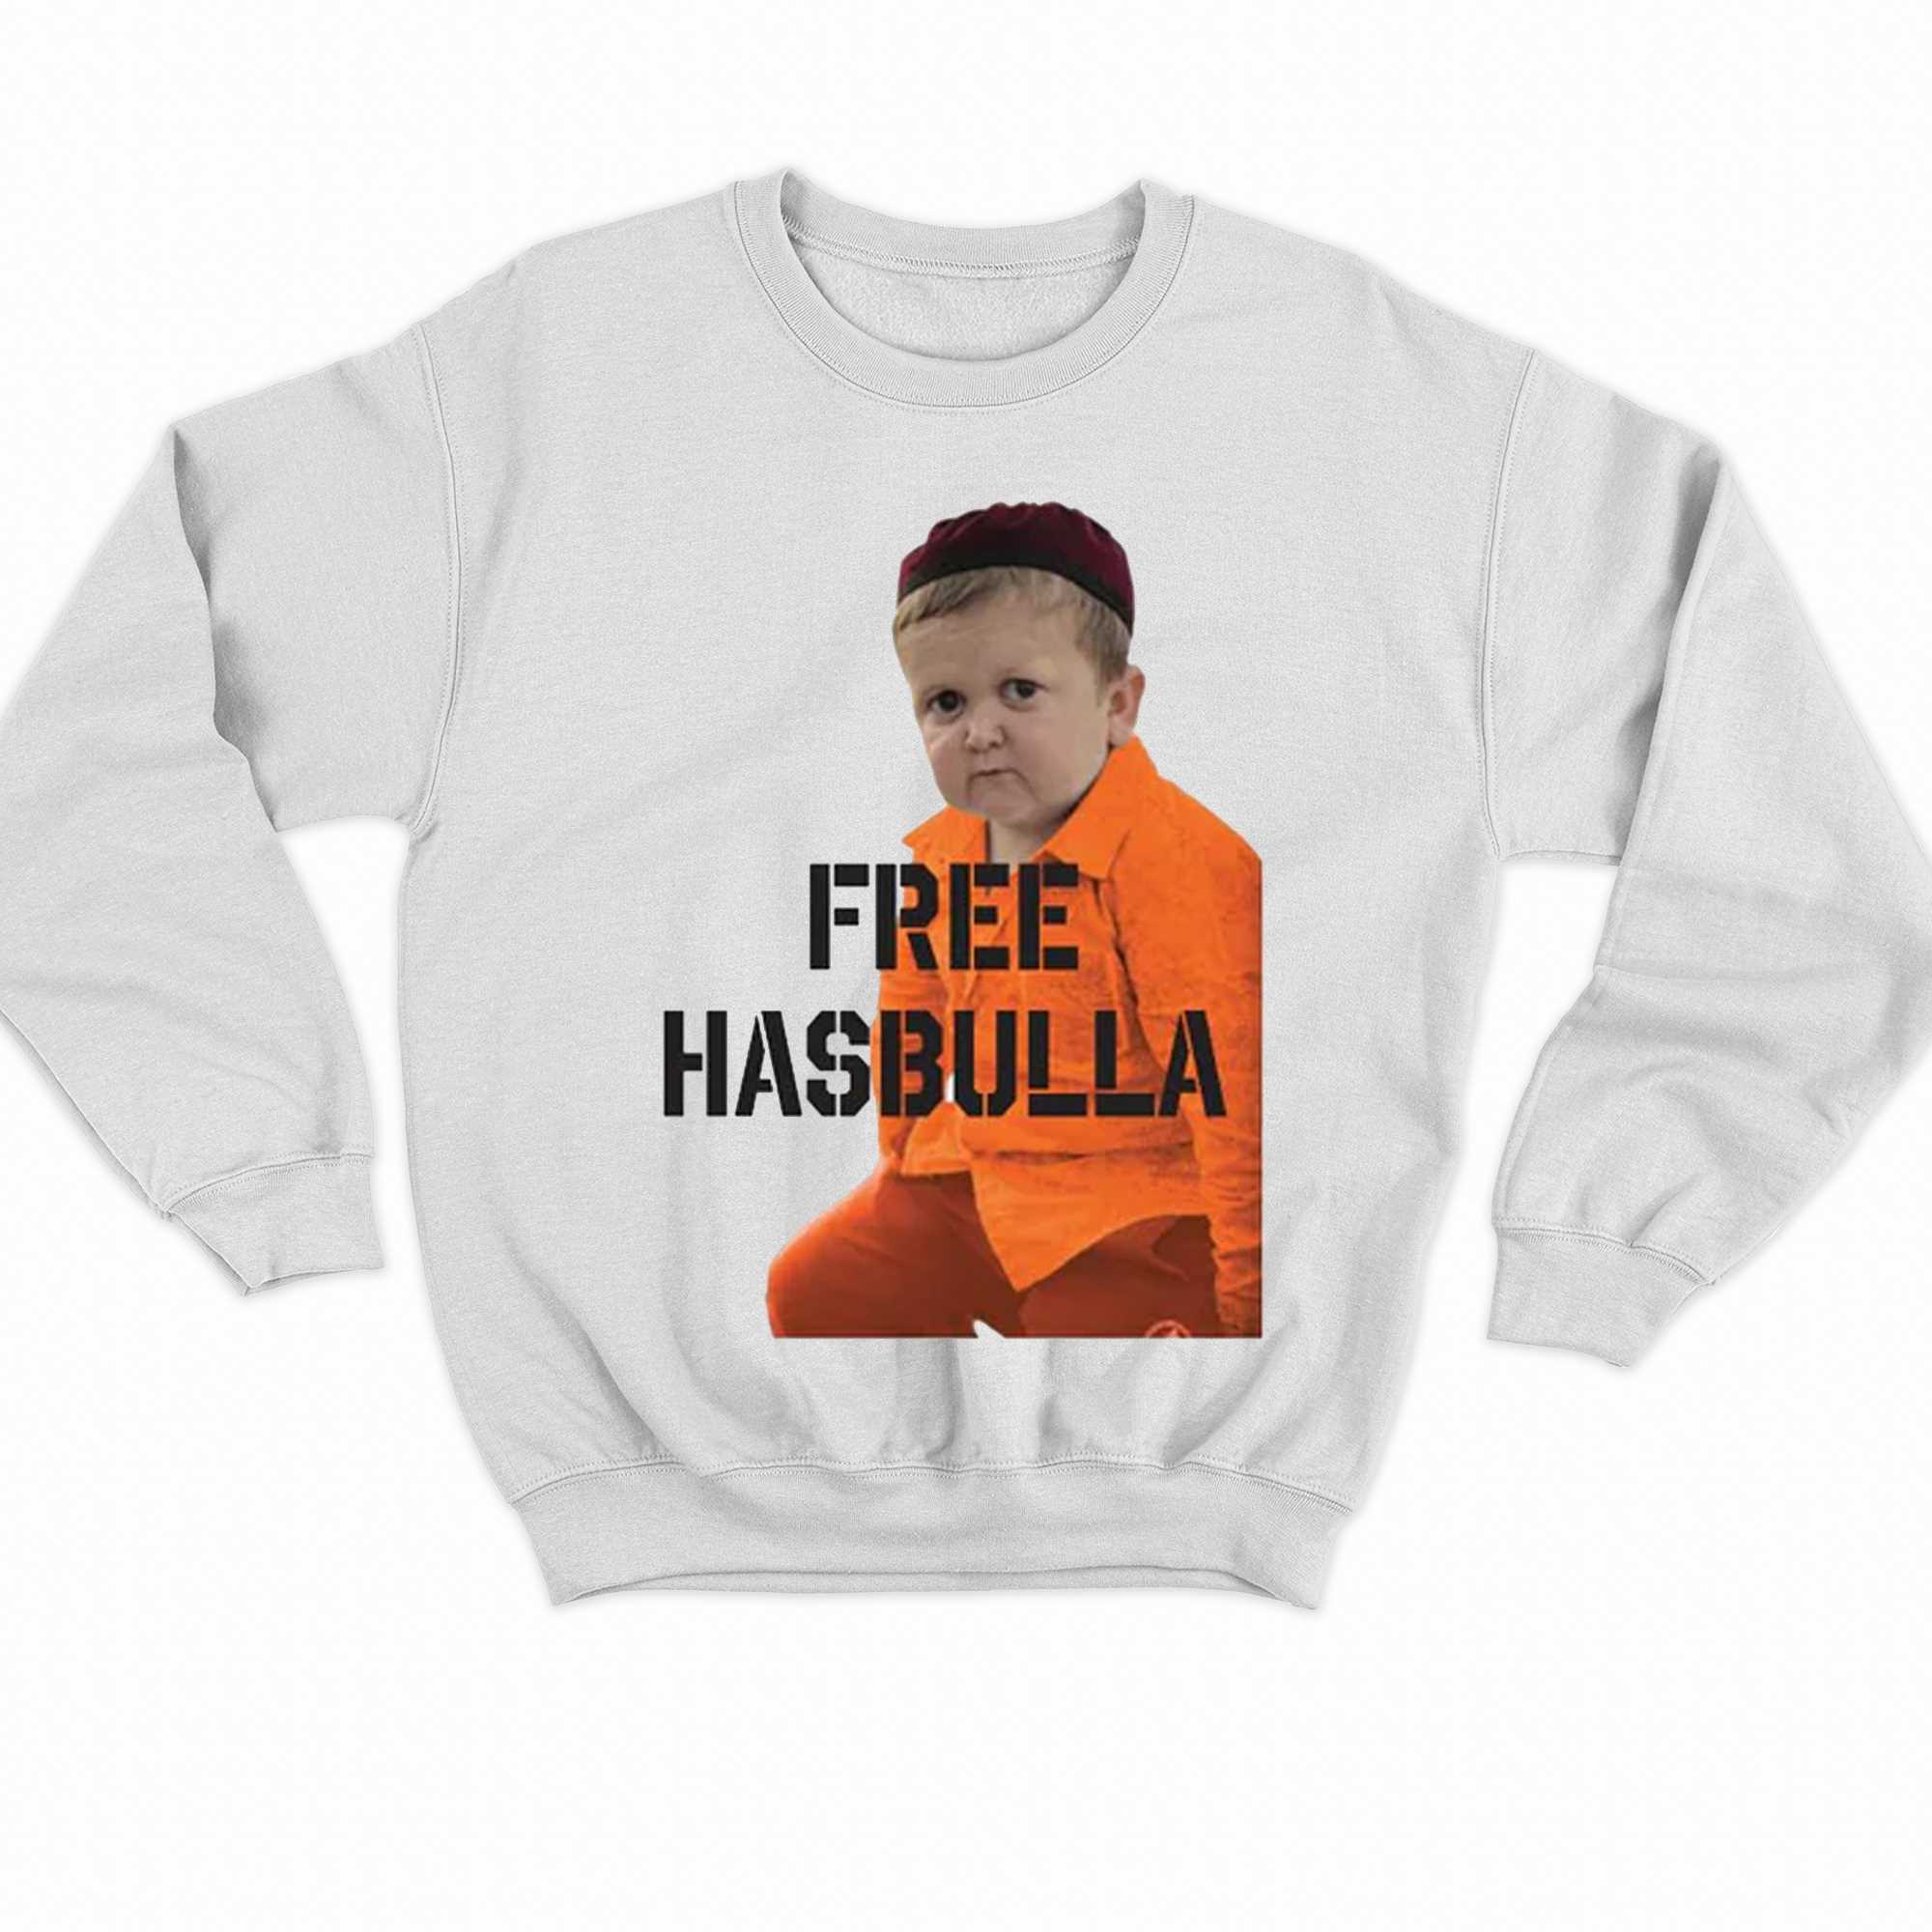 Free Hasbulla Tee - Shibtee Clothing